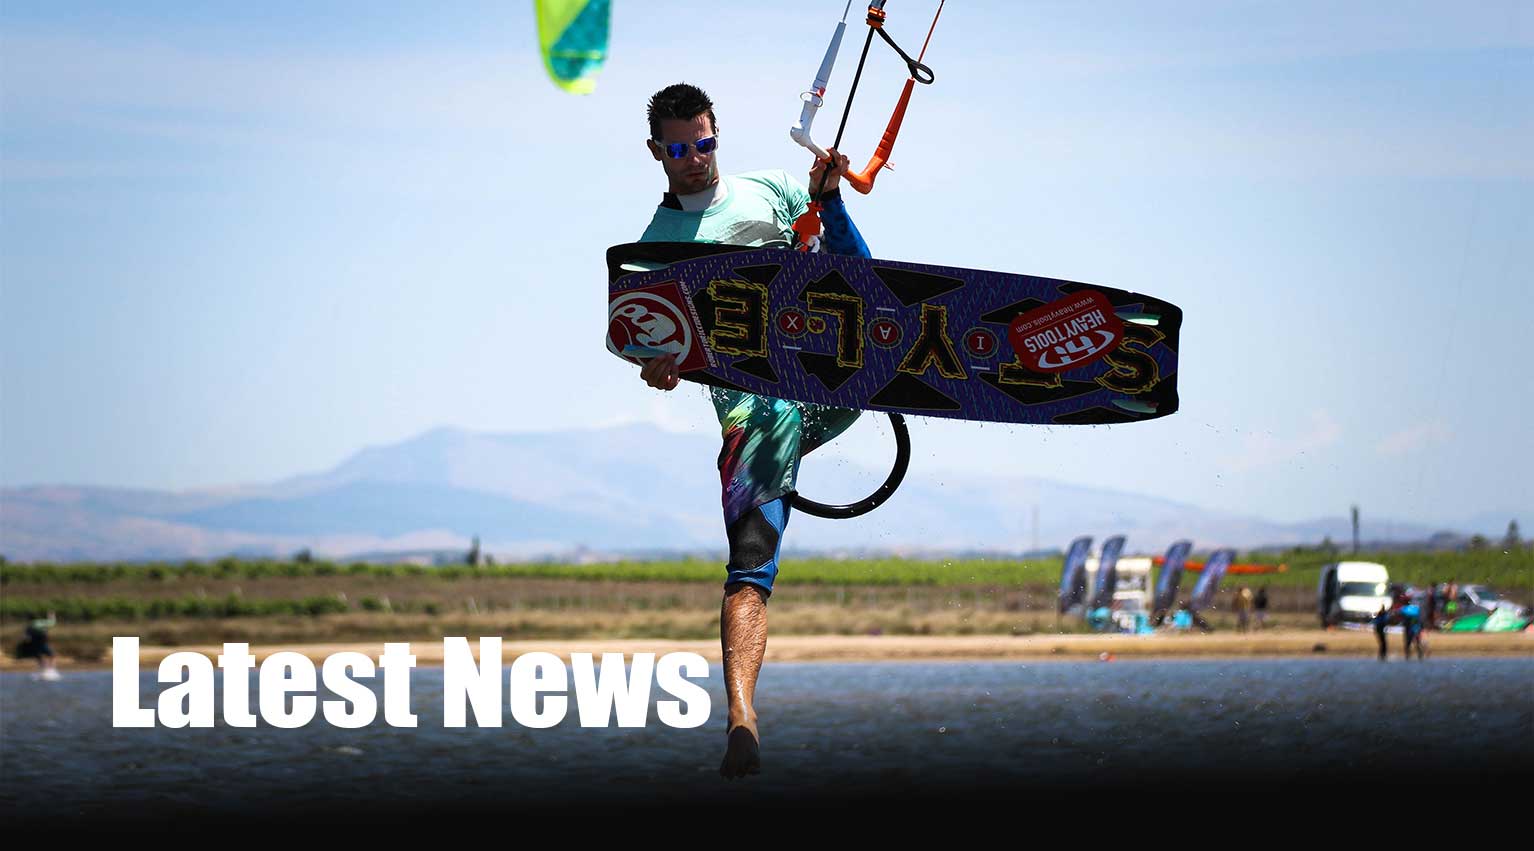 kitesurf news